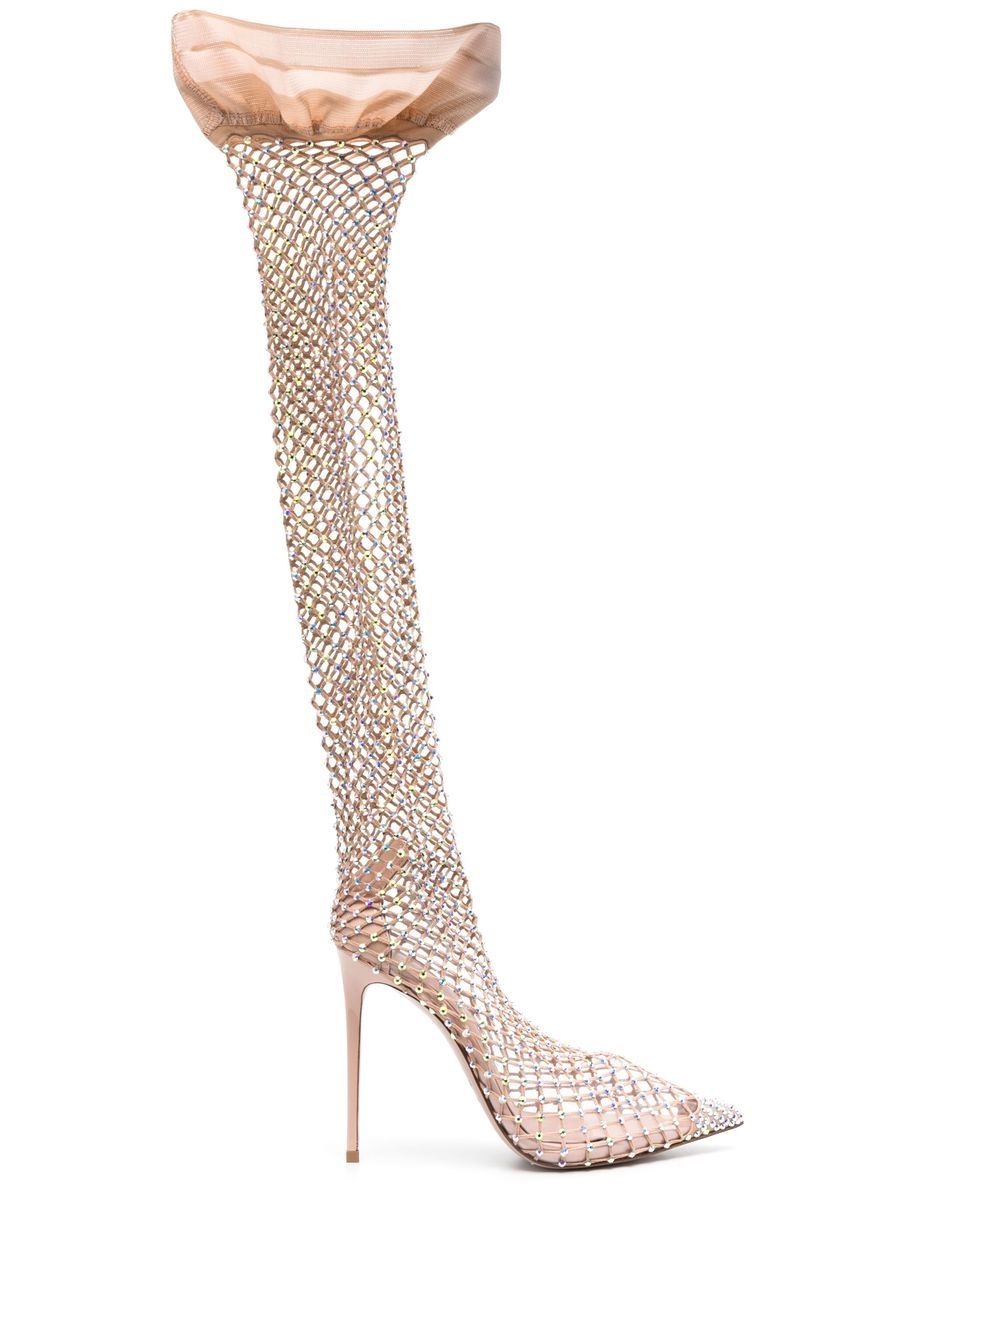 Le Silla Gilda thigh-high boot - Pink von Le Silla